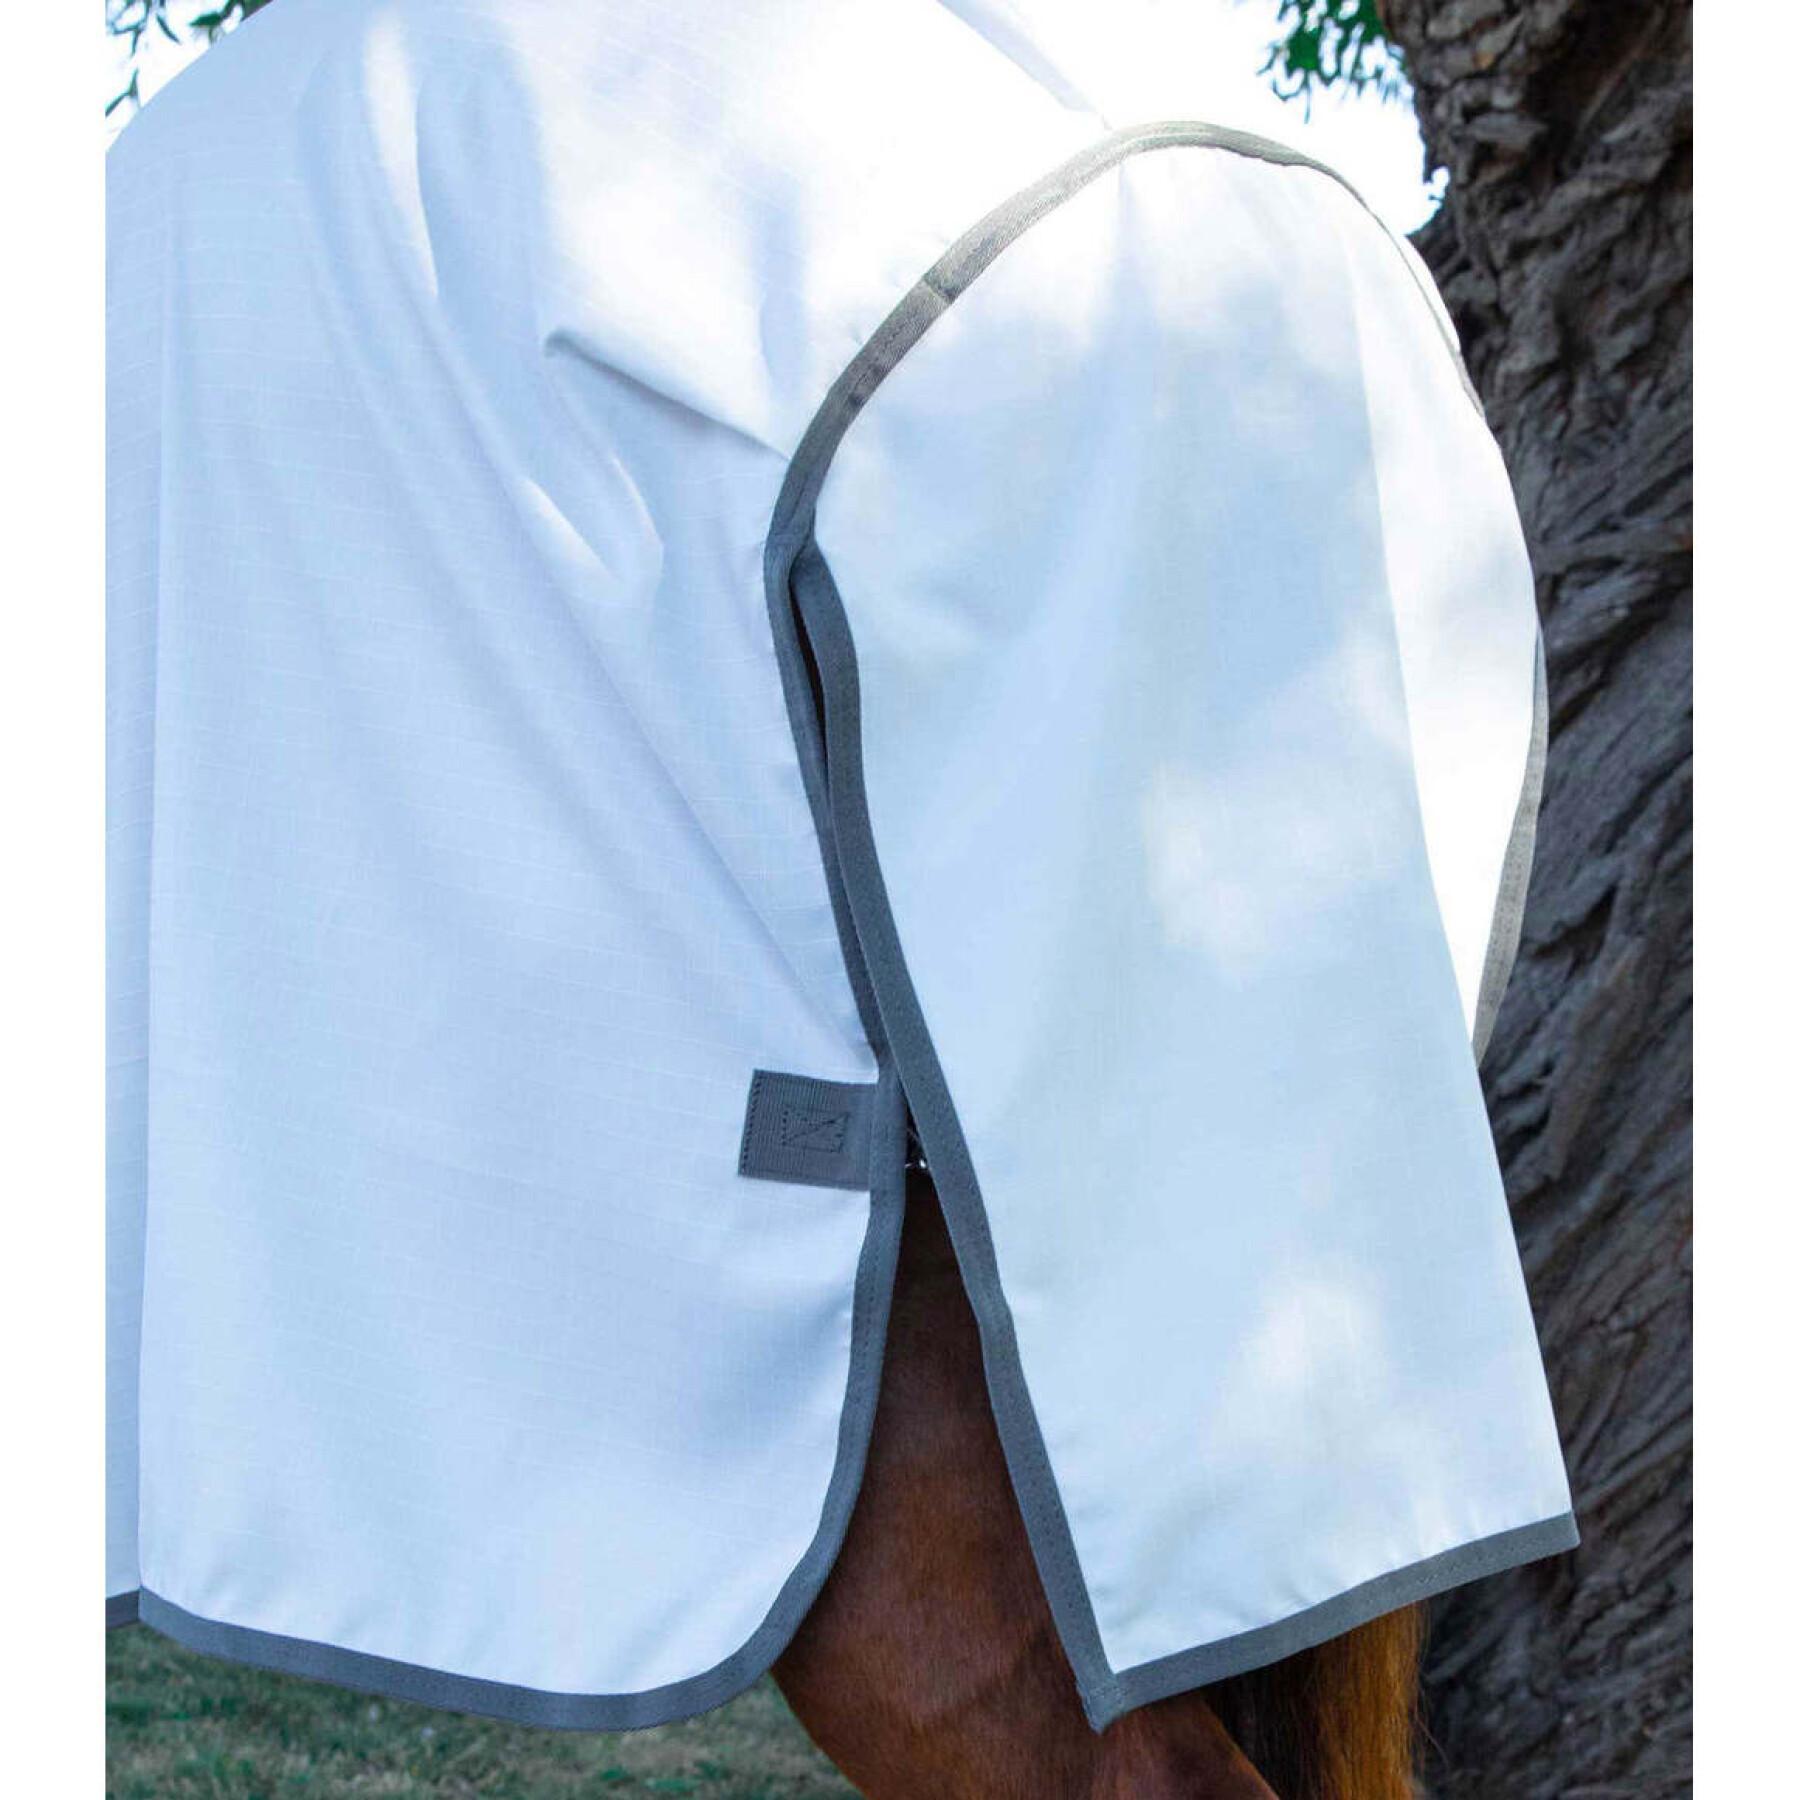 Couverture anti-mouches pour cheval avec rabat ventral Premier Equine Buster Sweet Itch